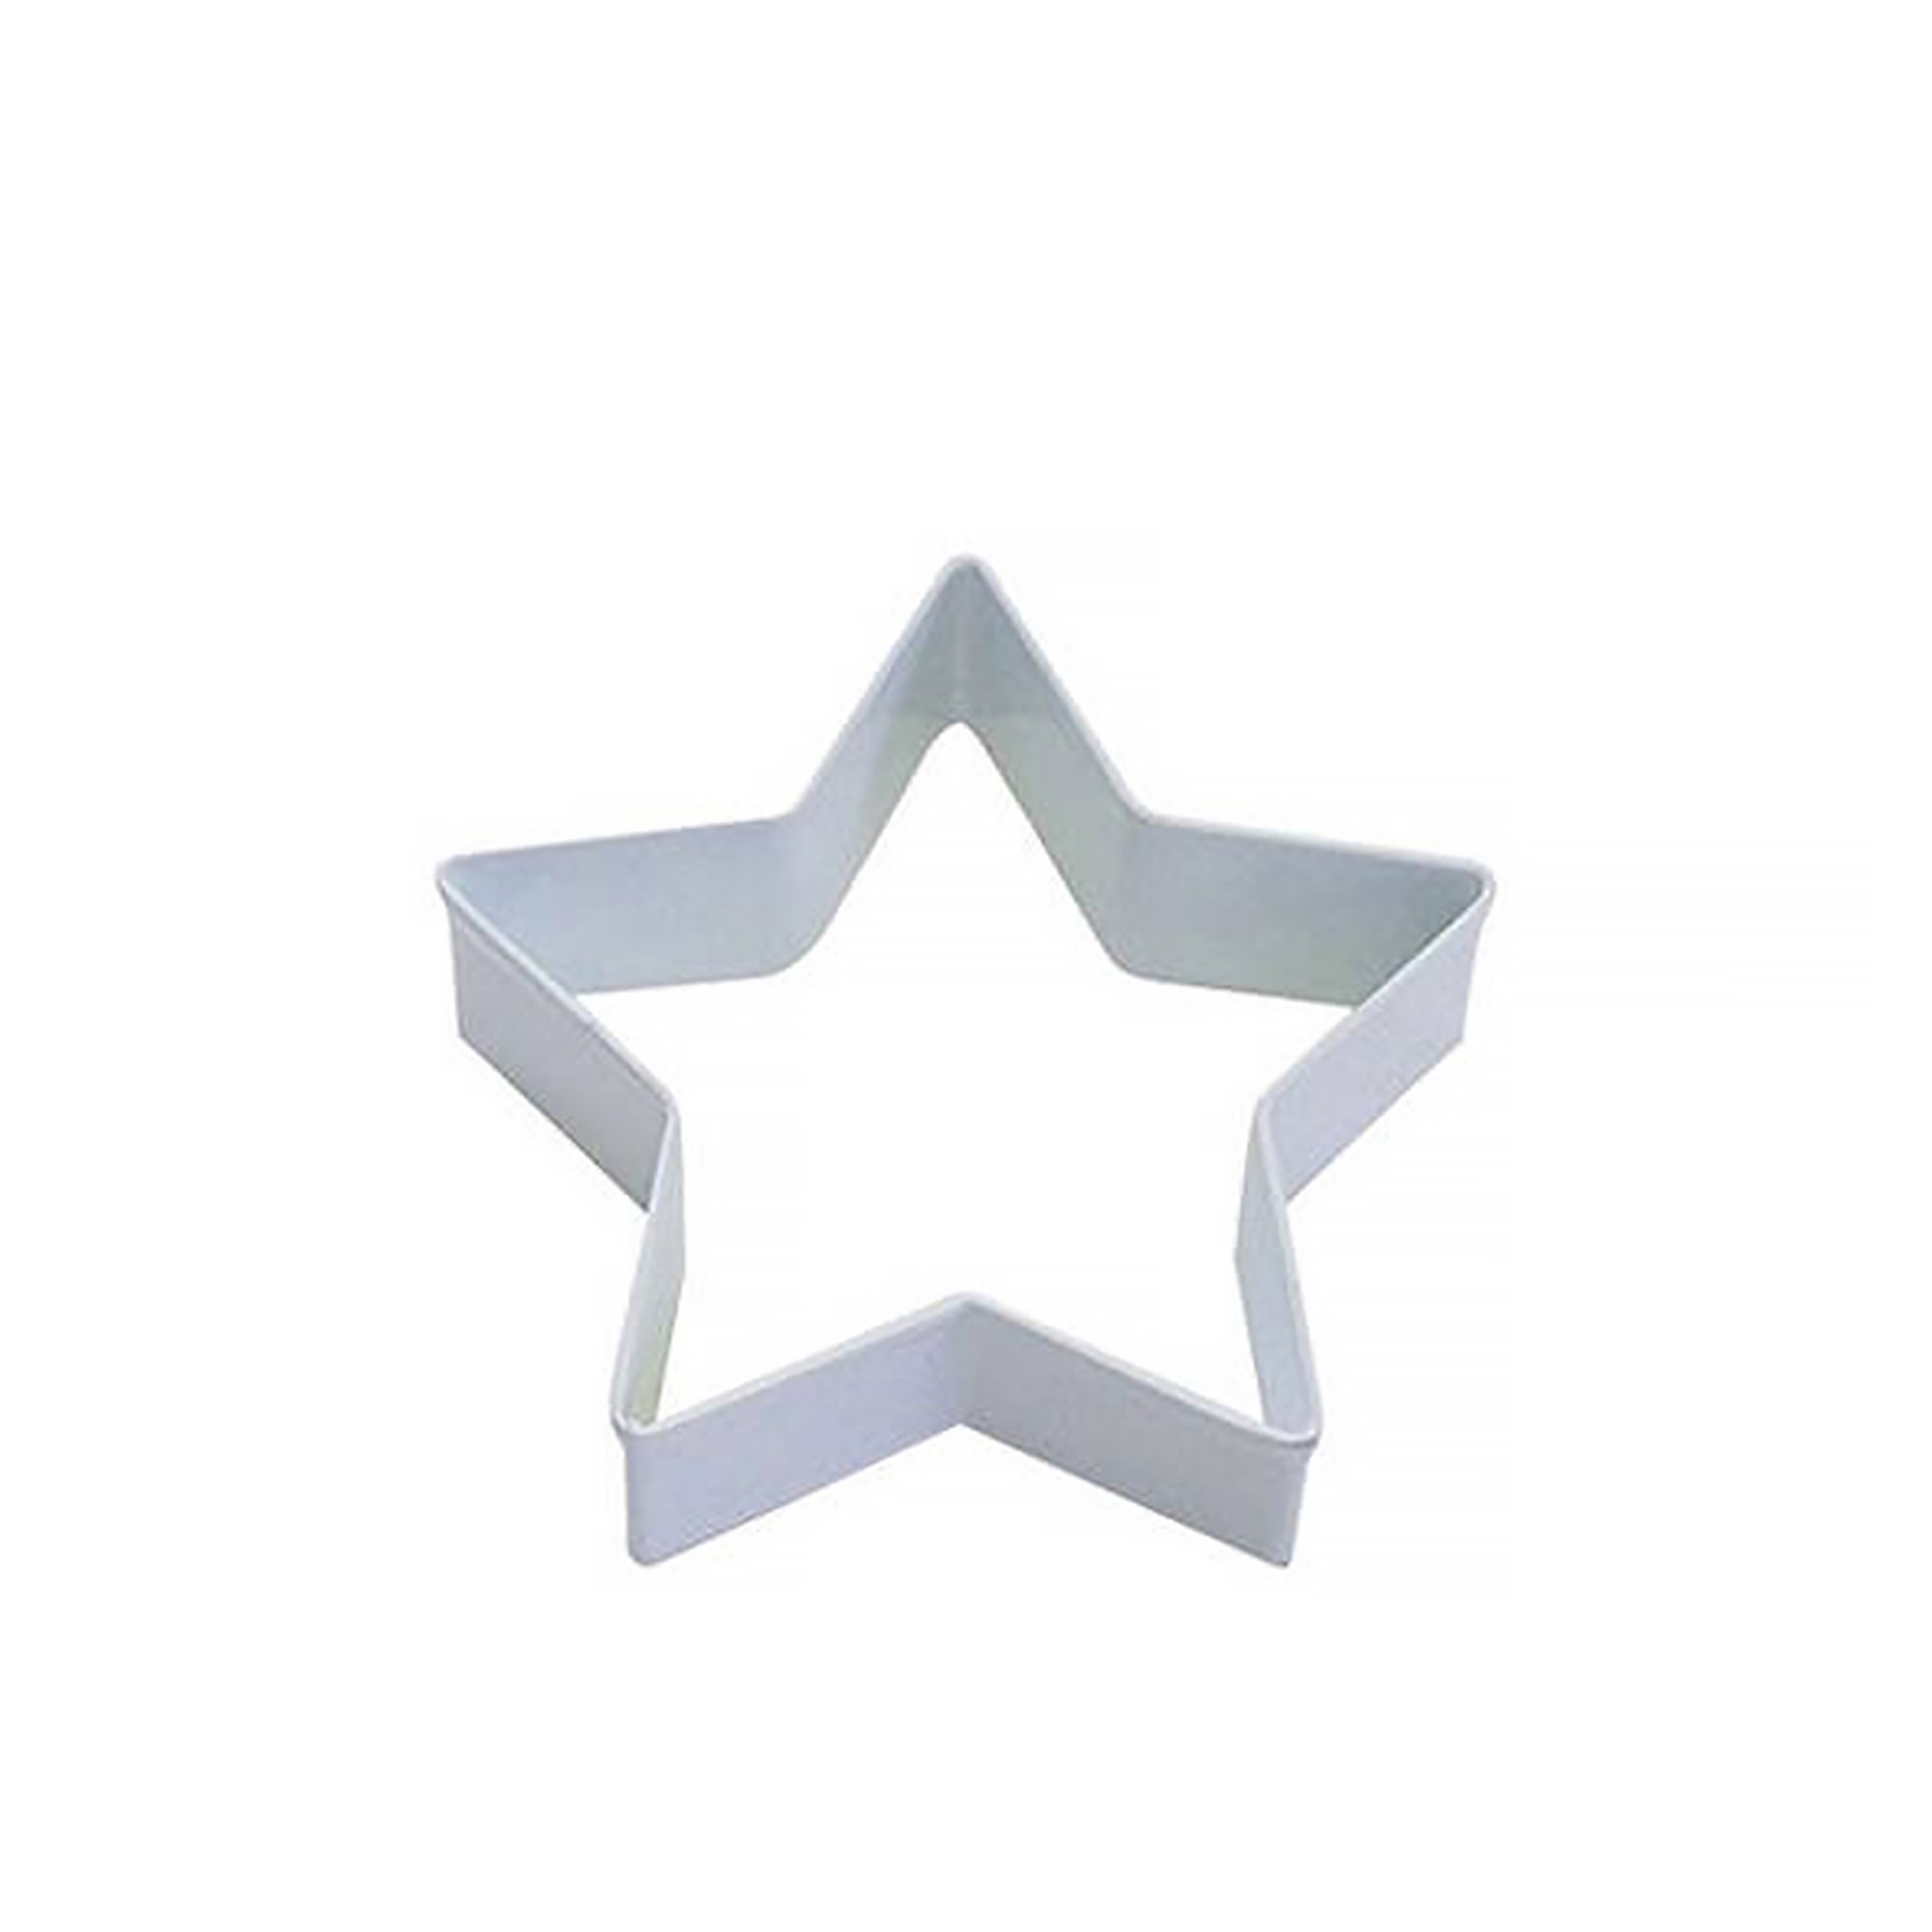 D.Line Cookie Cutter Star 9cm Image 1